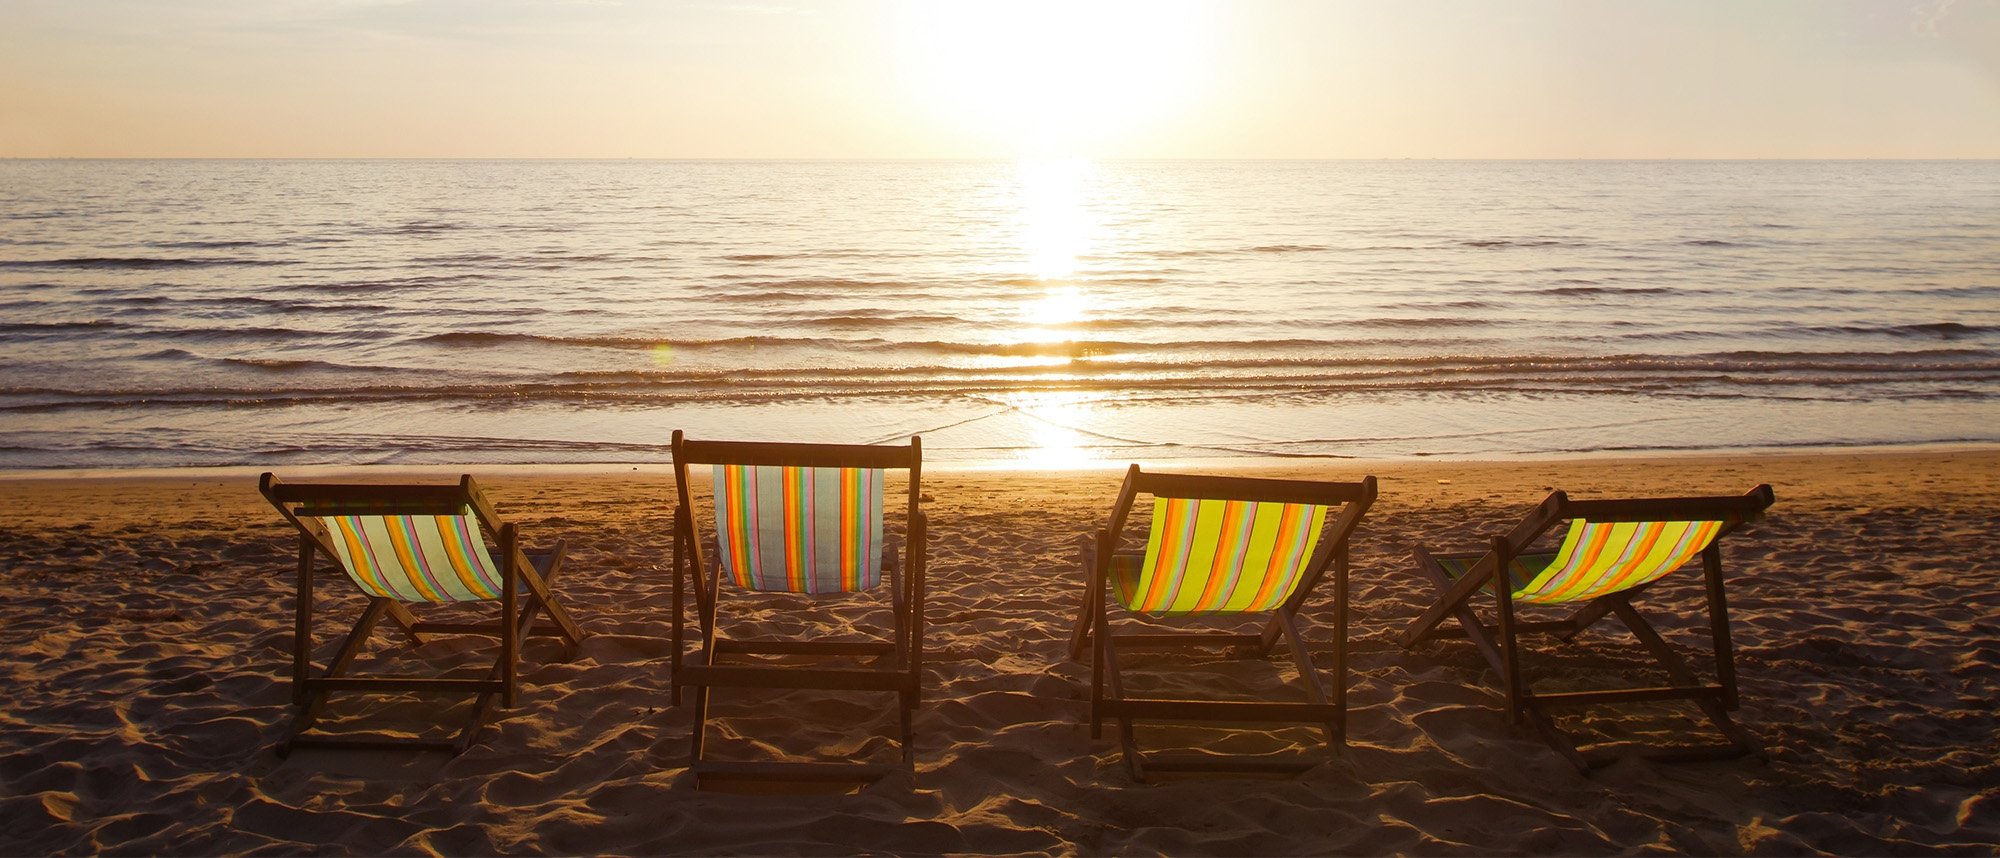 Beach Chairs at Sunset 